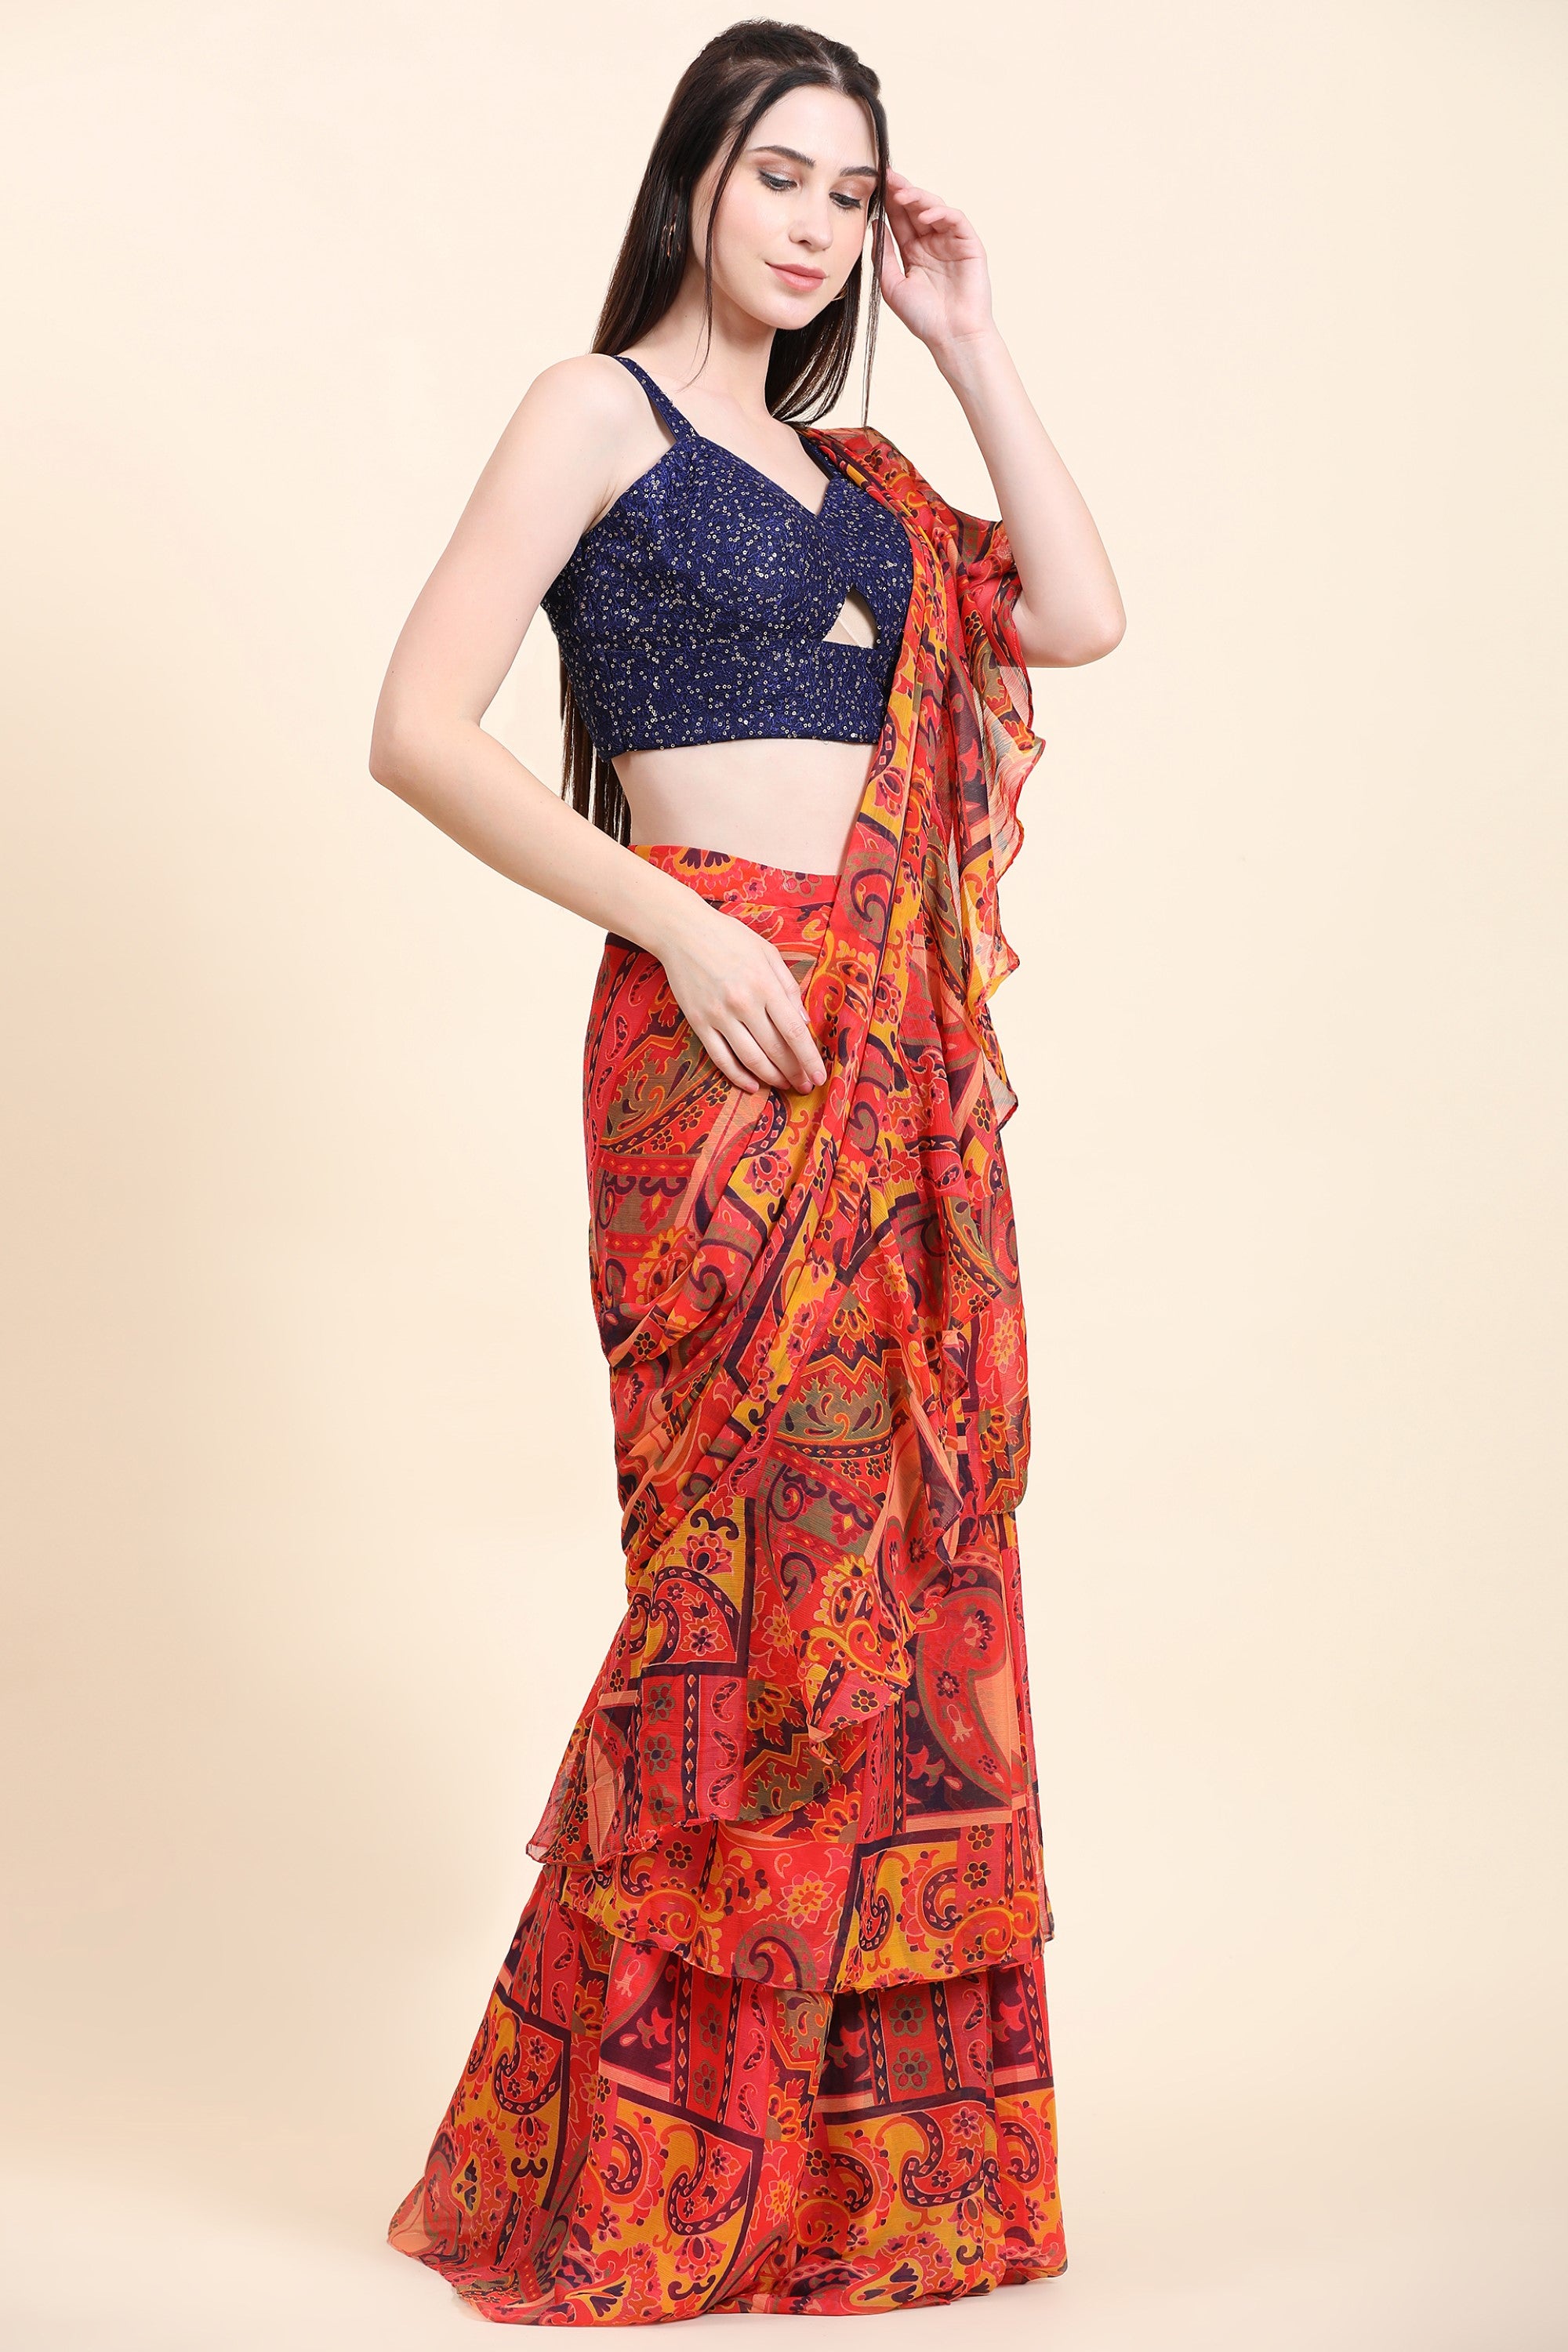 Women's Printed Chiffon Red base Multitier Ruffle pallu Saree, Sequins Blouse set - MIRACOLOS by Ruchi